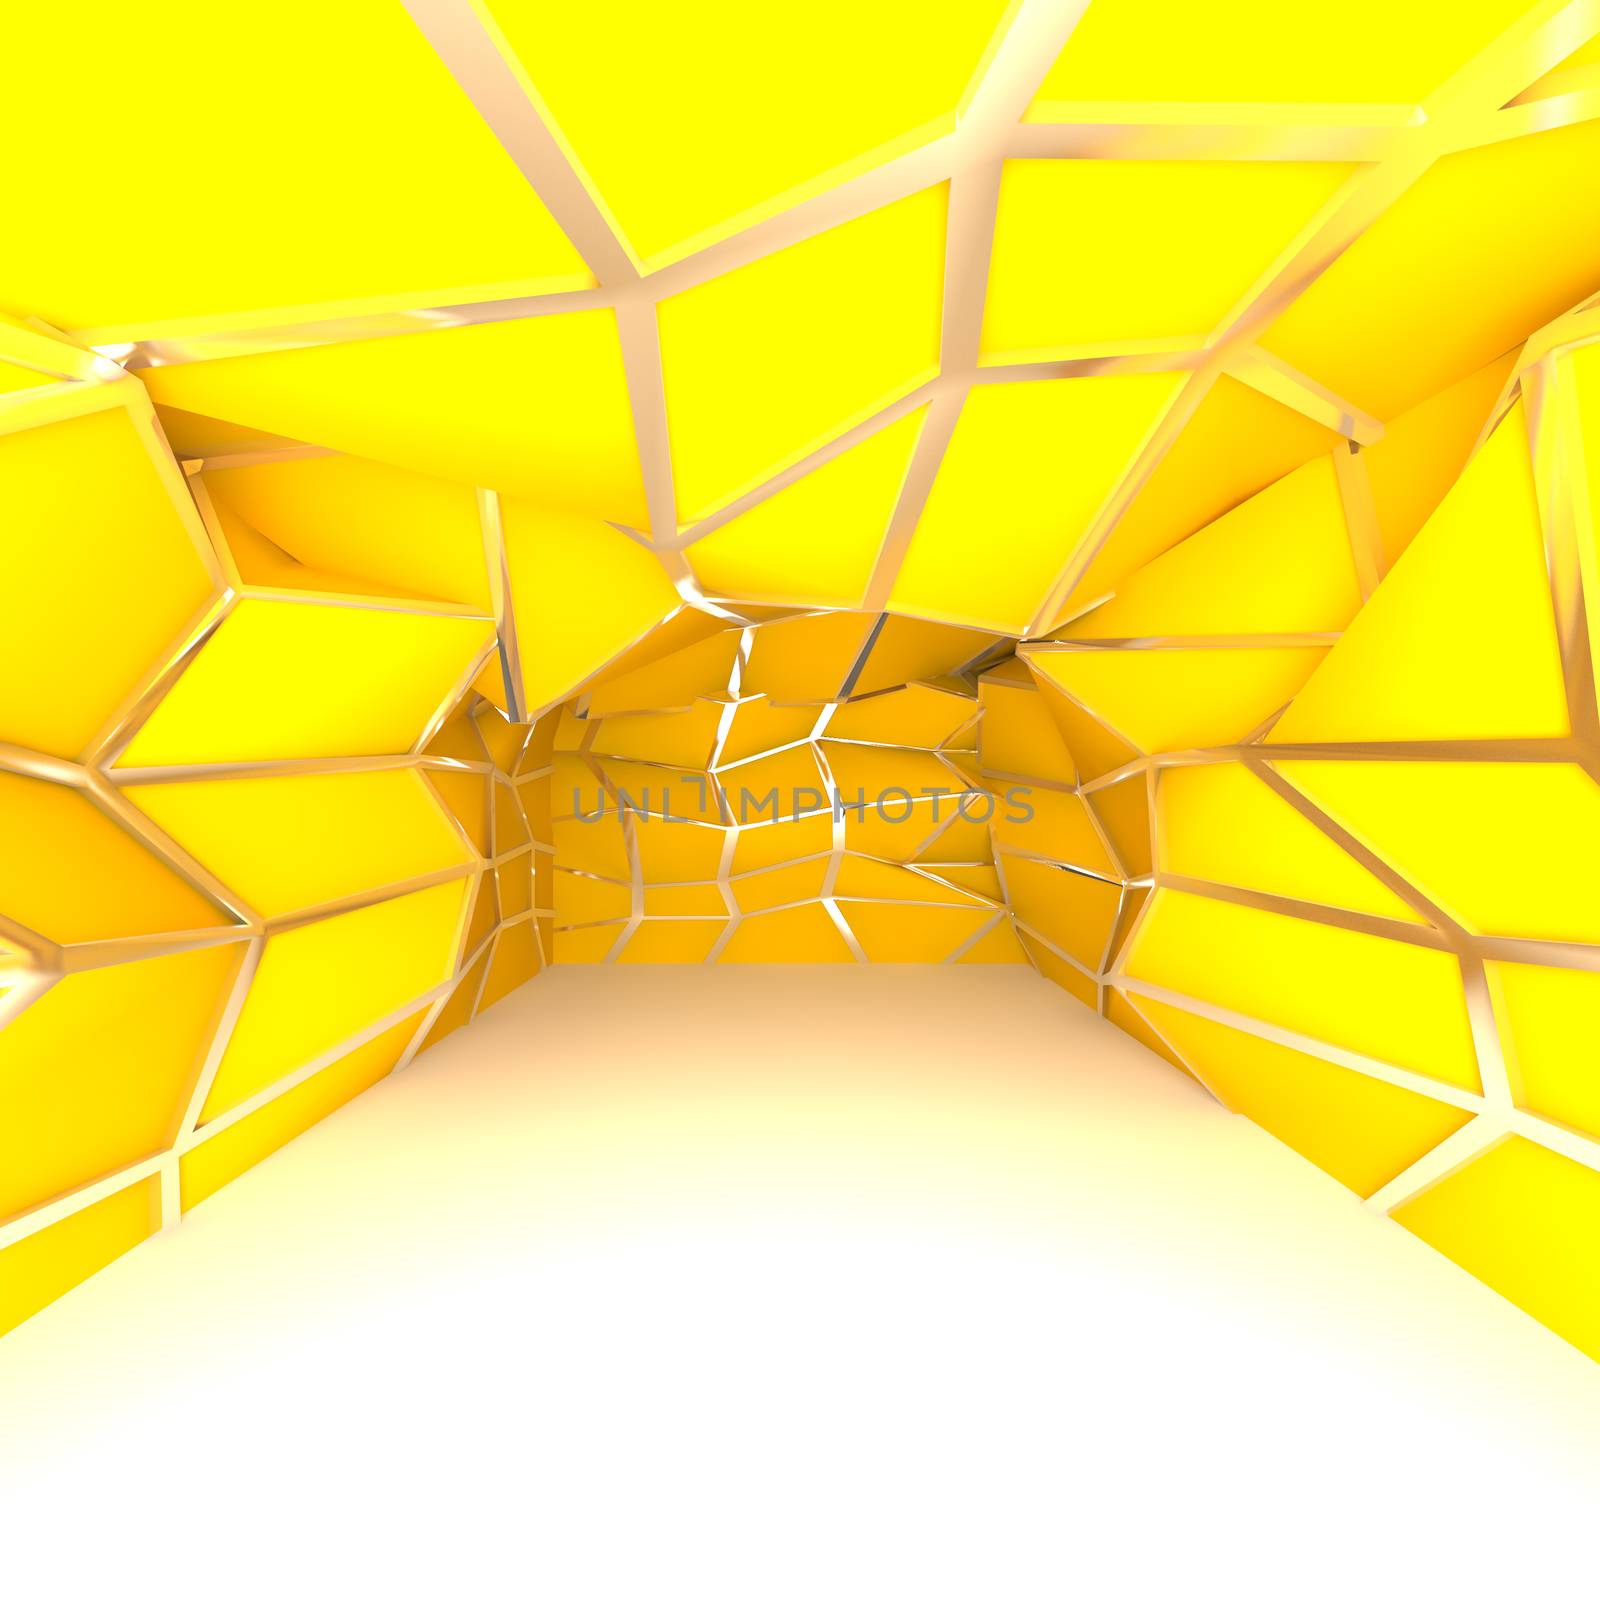 empty room yellow diagonal wall by sumetho